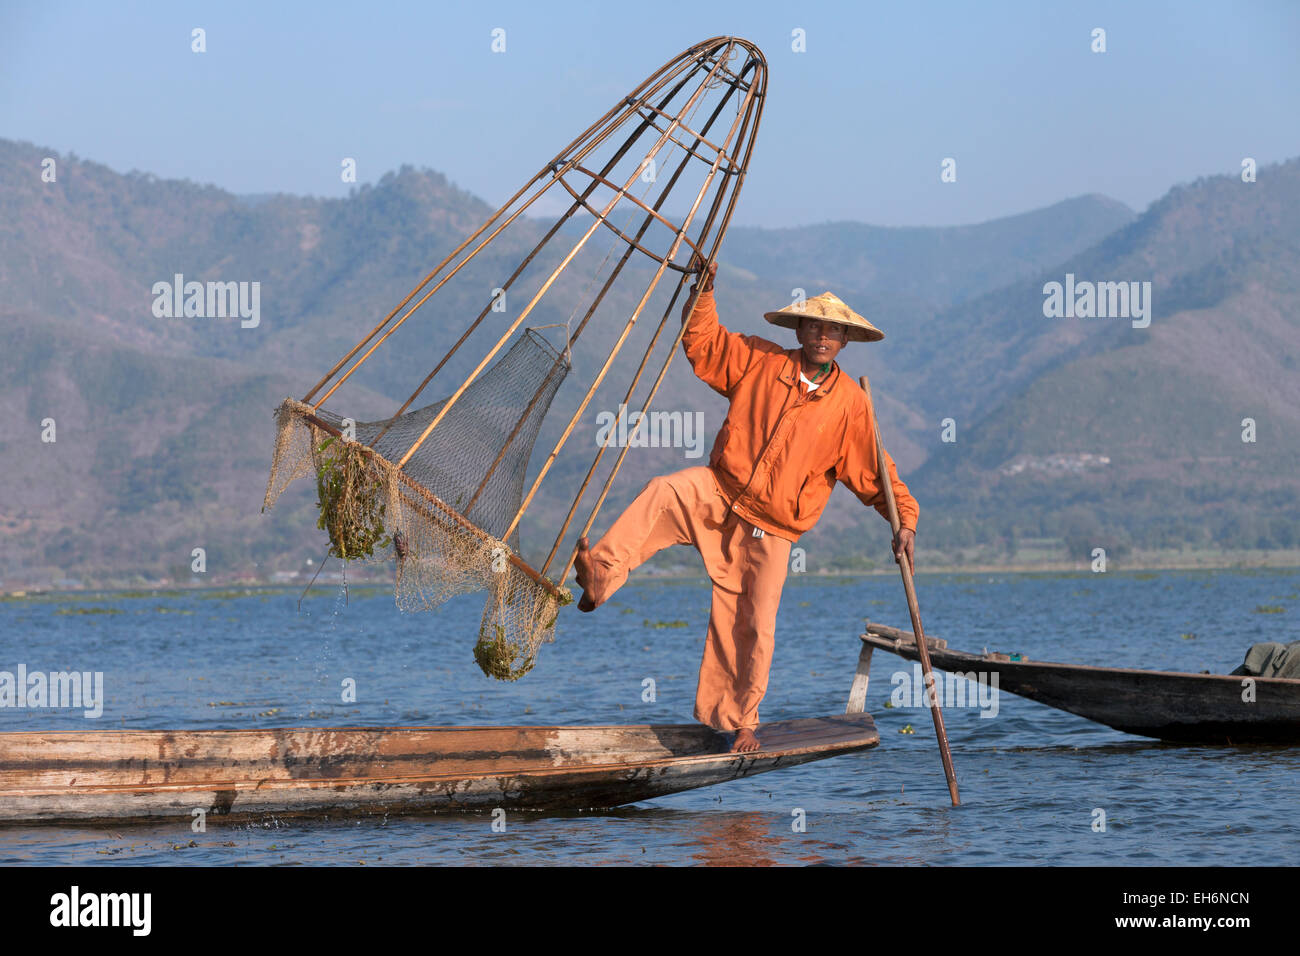 Inle See Bein Rudern Fischer angeln, Inle-See, Myanmar (Burma), Asien Stockfoto